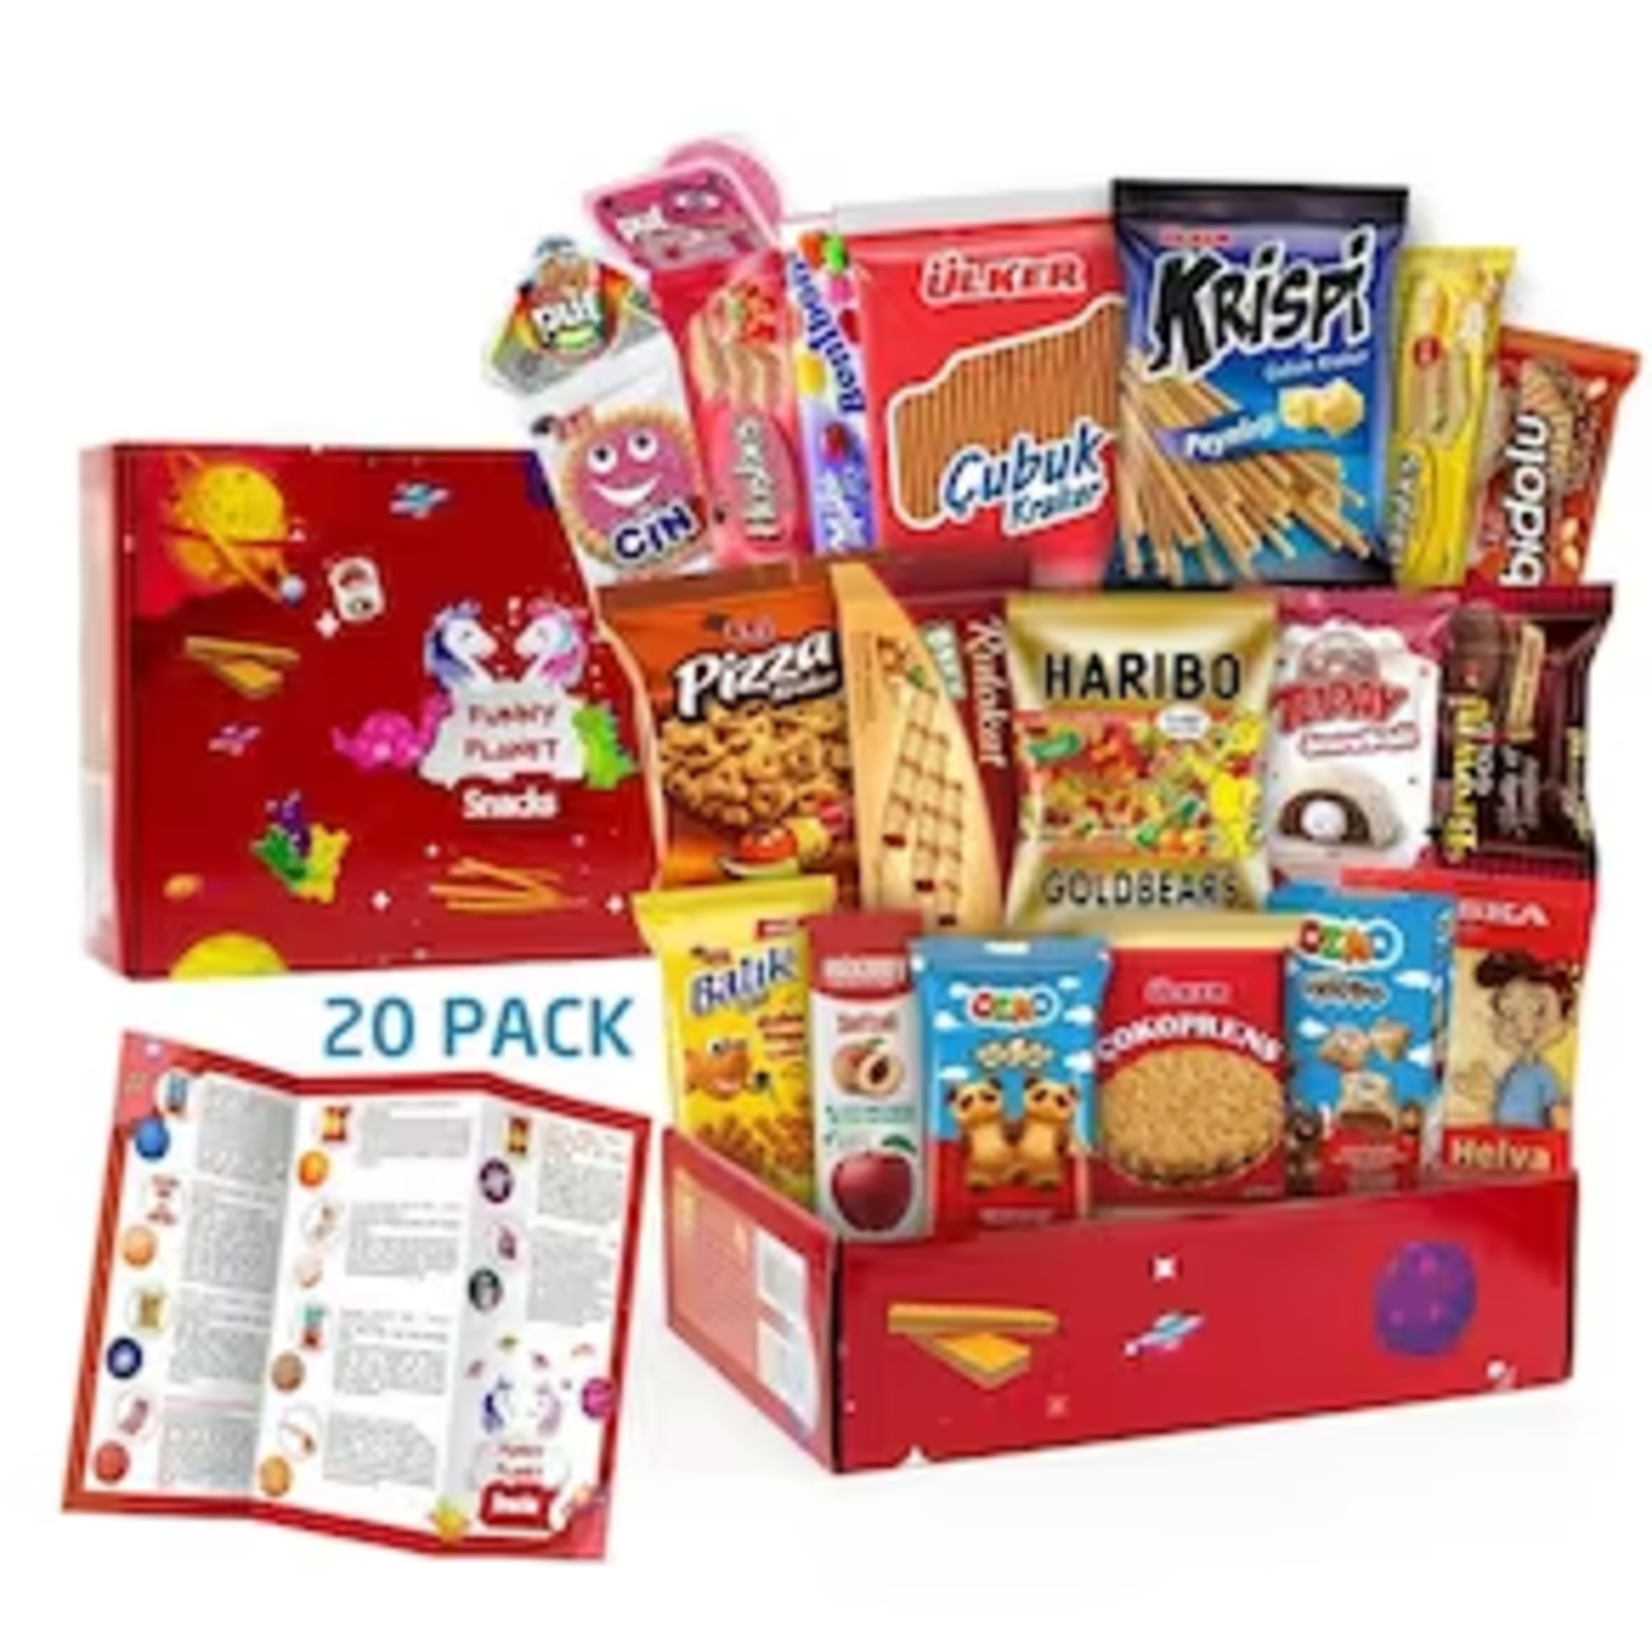 https://cdn.shoplightspeed.com/shops/631982/files/59905606/1652x1652x1/carians-bistro-international-gourmet-snack-box-20.jpg